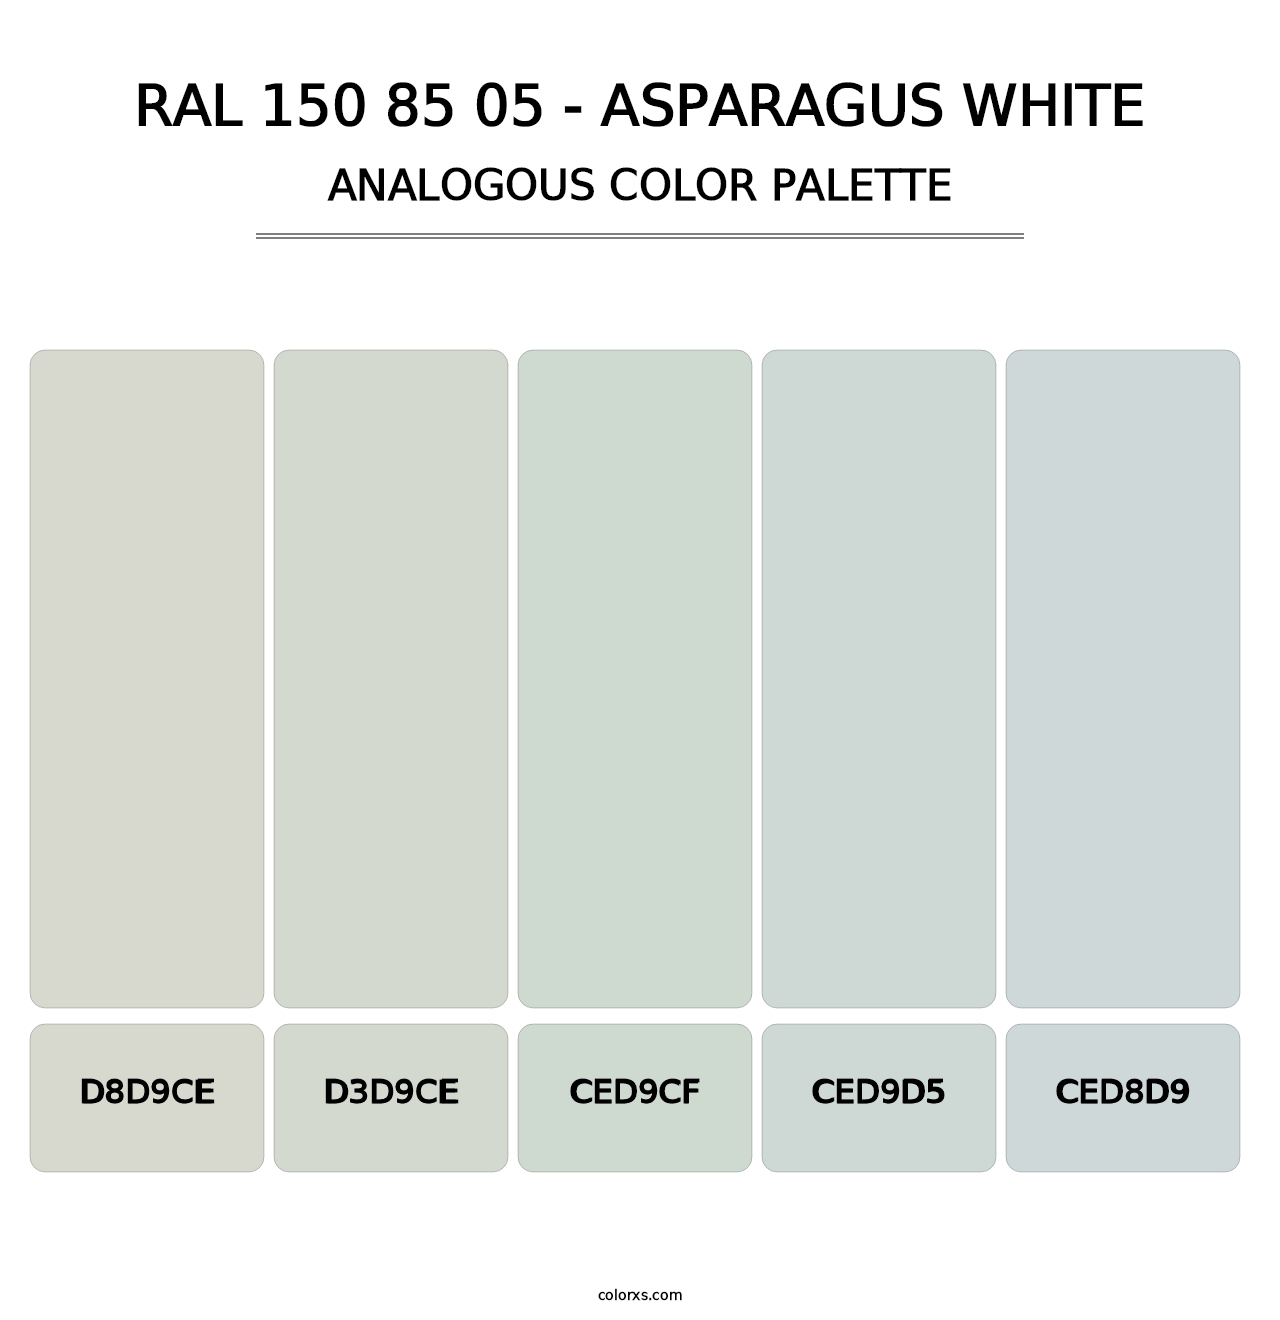 RAL 150 85 05 - Asparagus White - Analogous Color Palette